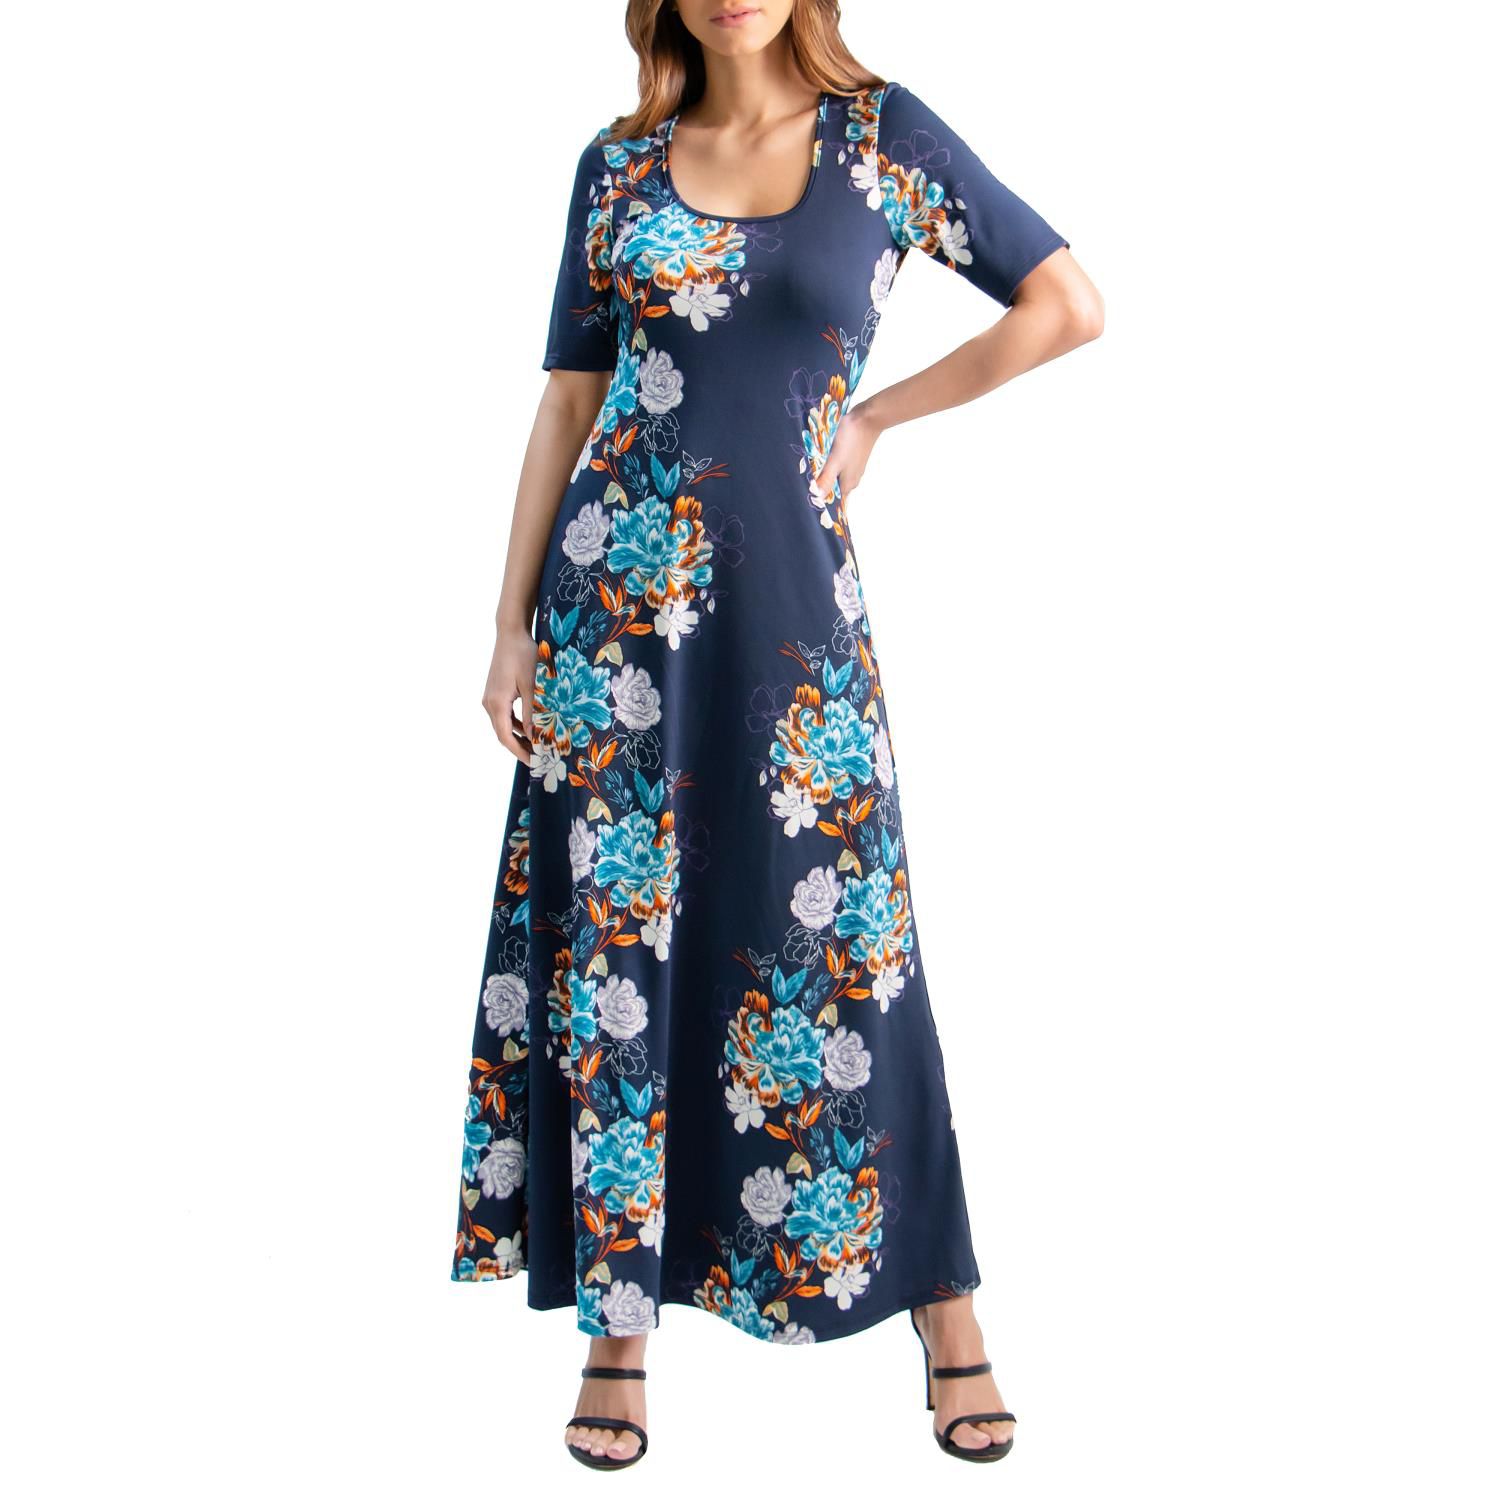 Women's 24seven Comfort Apparel Scoopneck Long Sleeve Maxi Dress